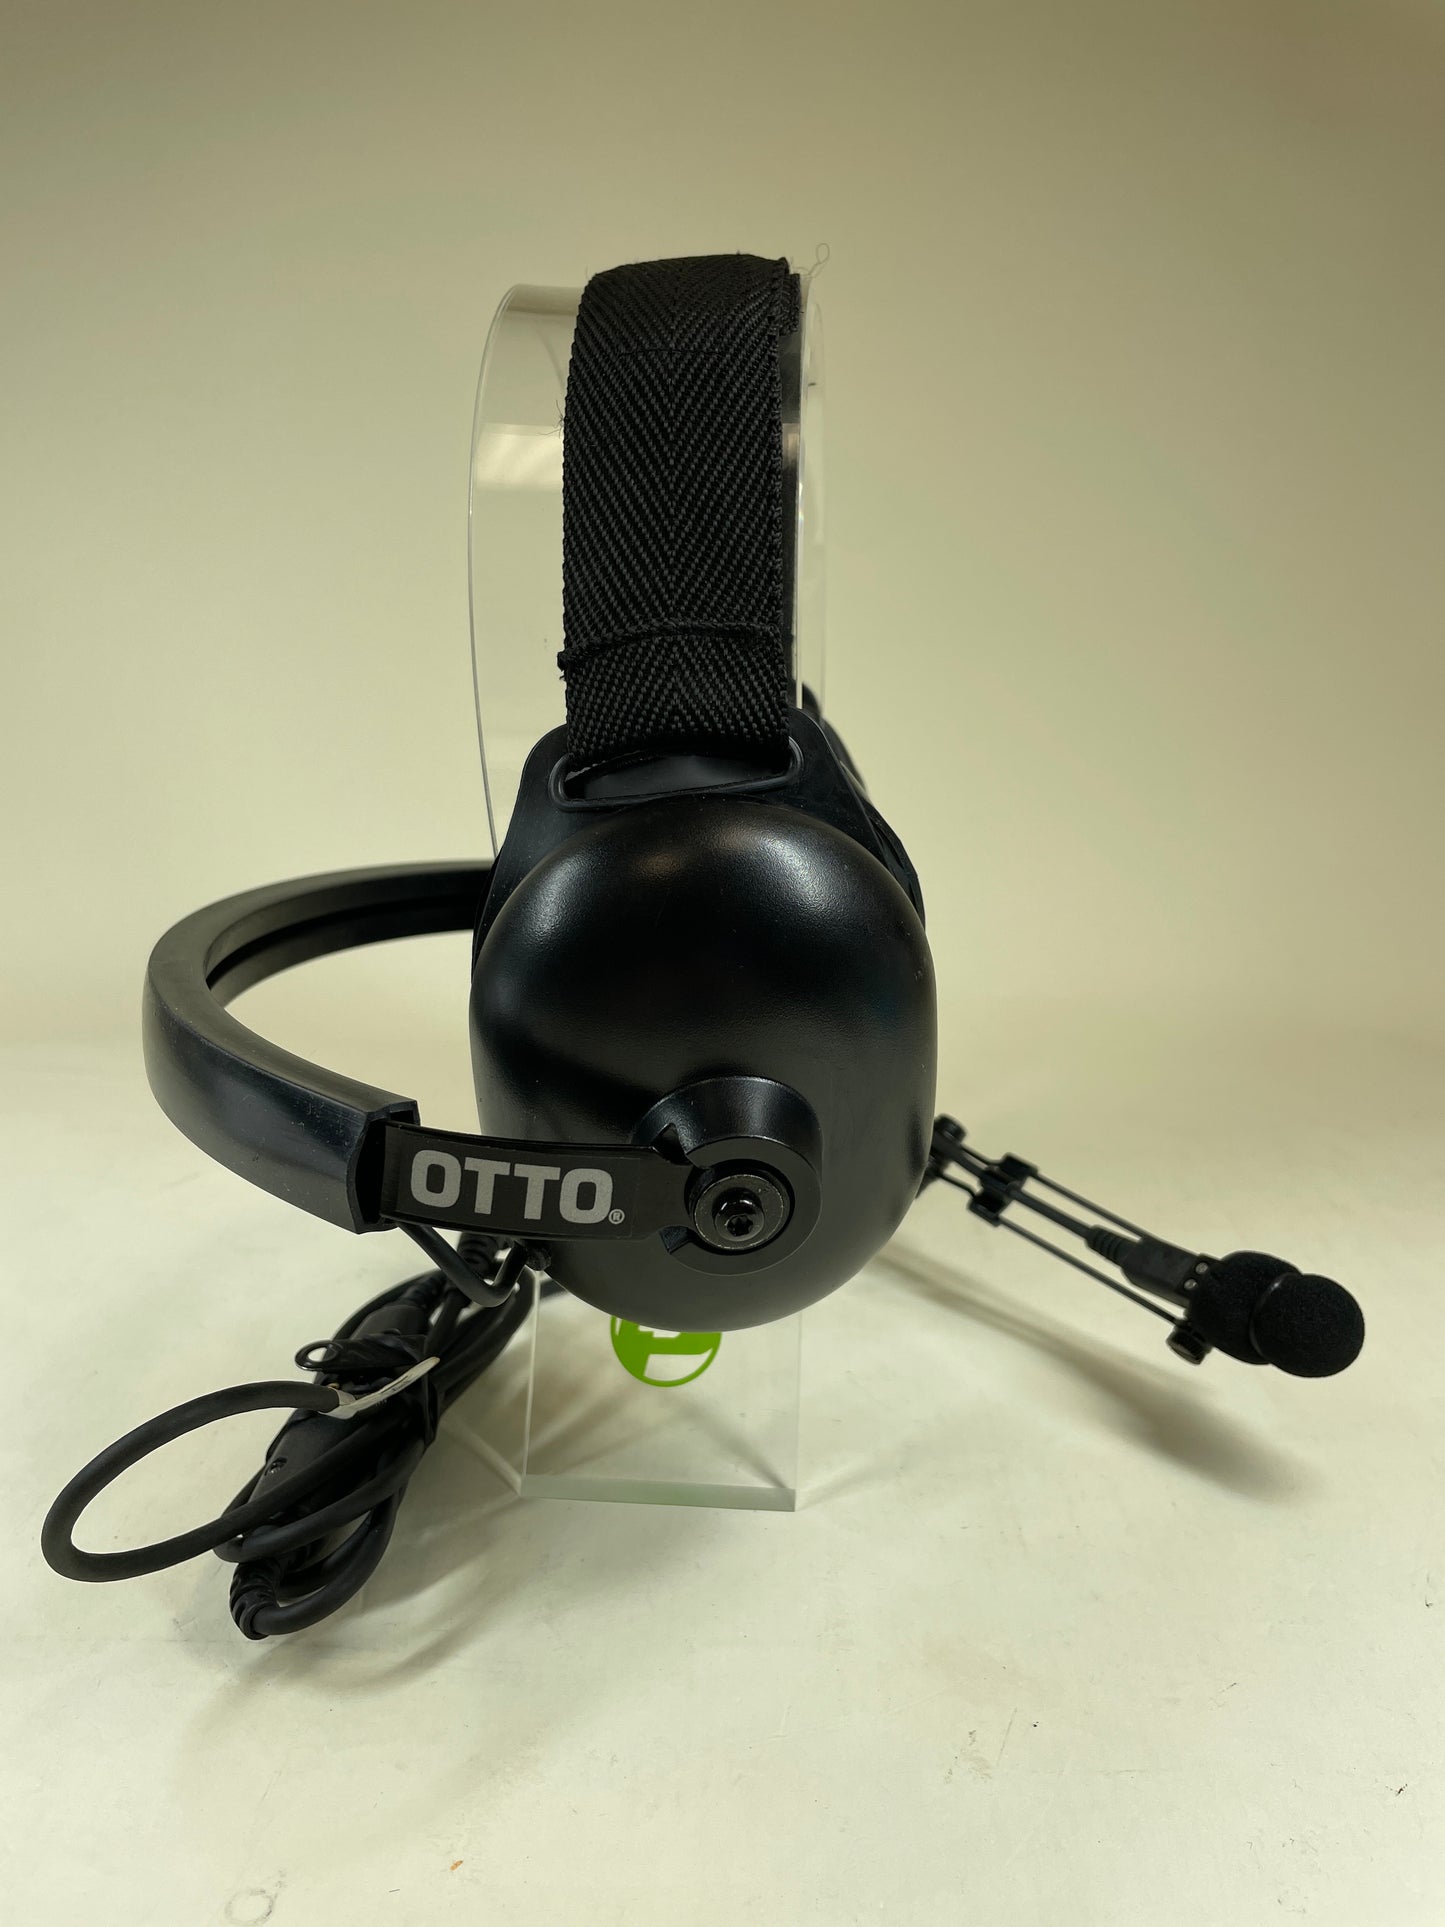 Otto v4 Lightweight Professional Headset Black